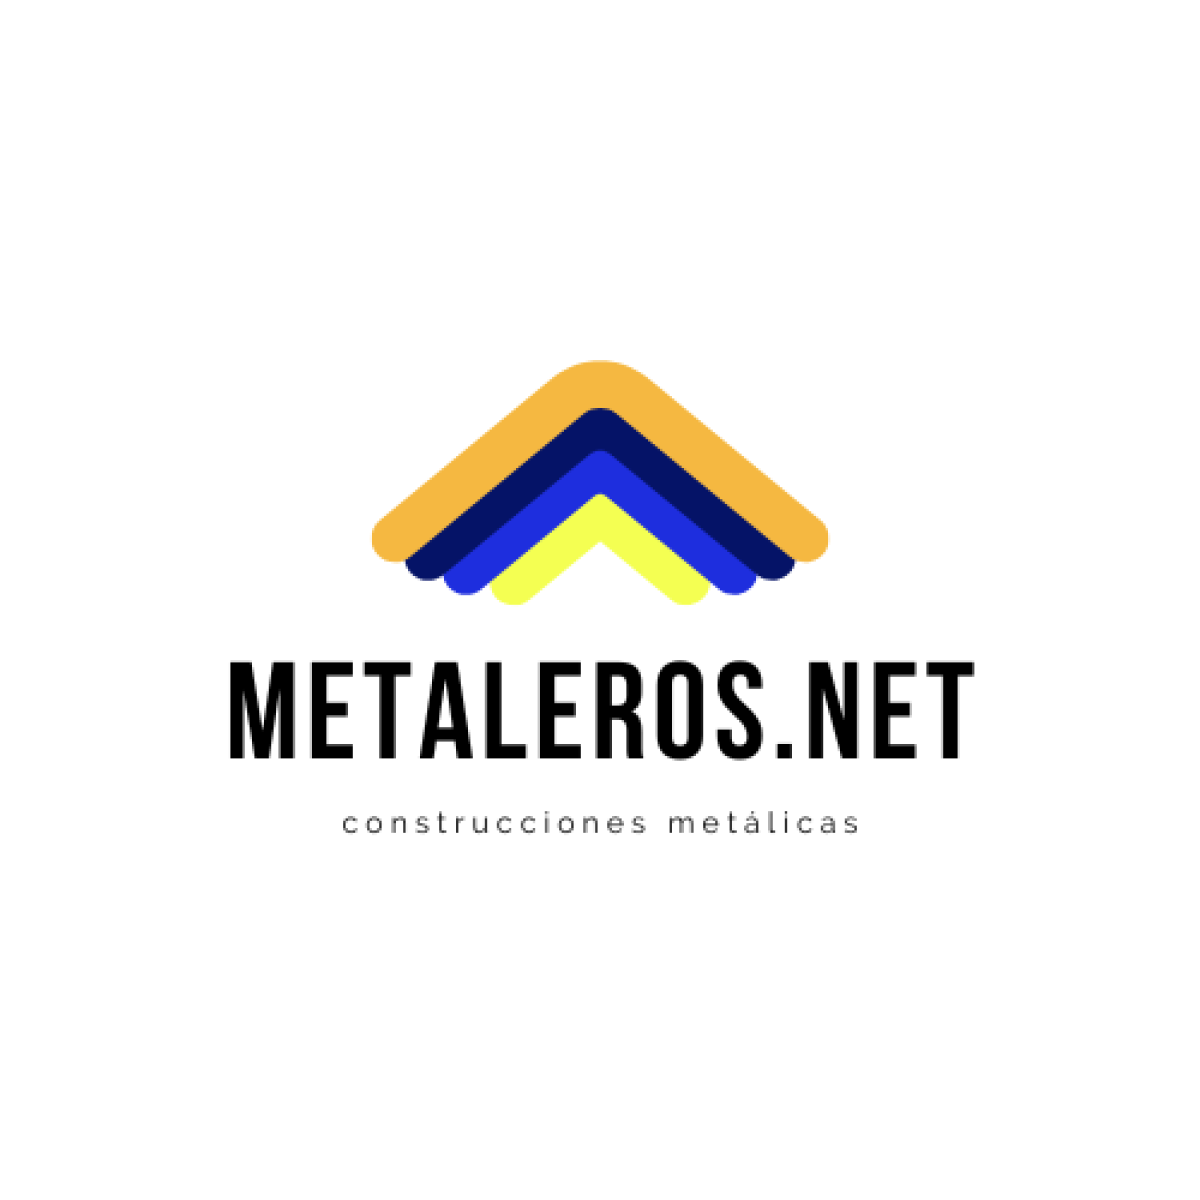 Logotipo corporativo triangular fondo blanco metaleros